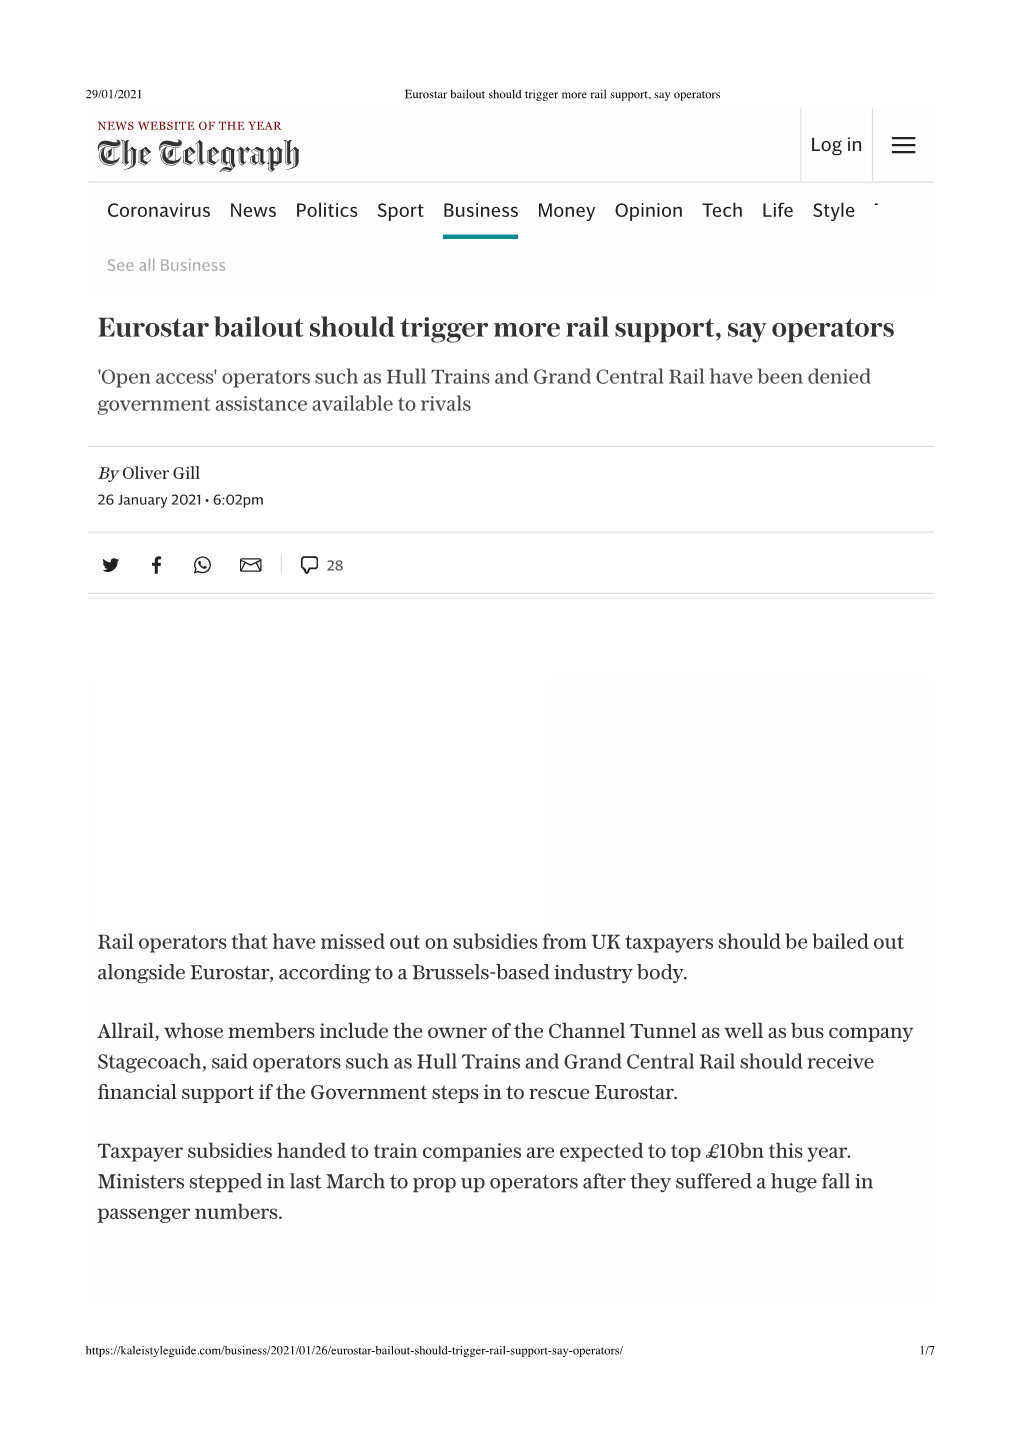 Eurostar Bailout Should Trigger More Rail Support, Say Operators Copy